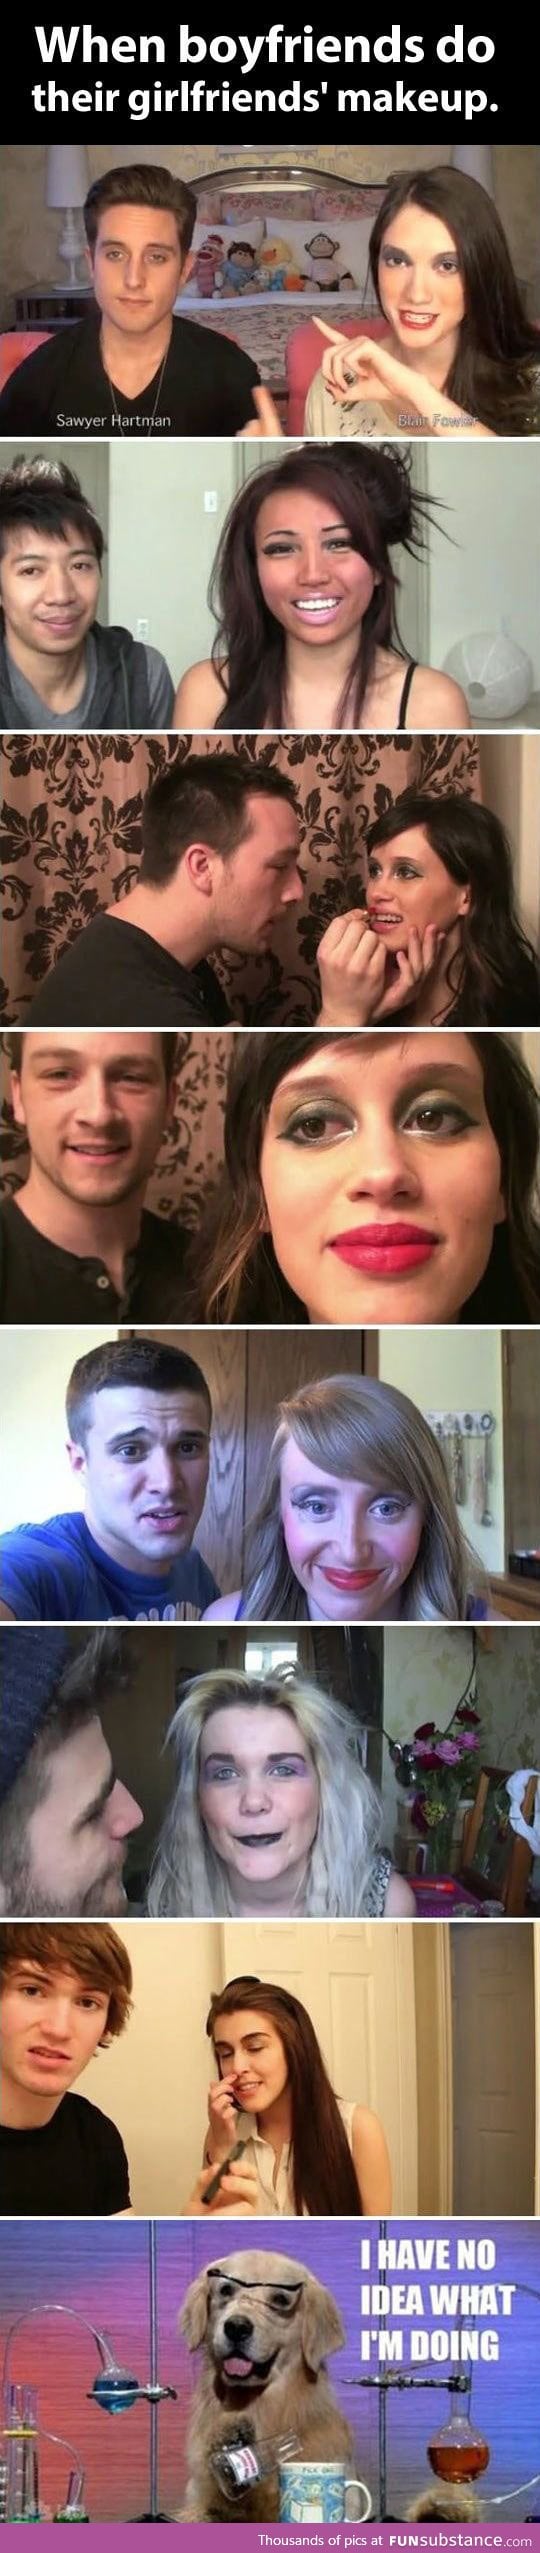 Boyfriends don't do make-up